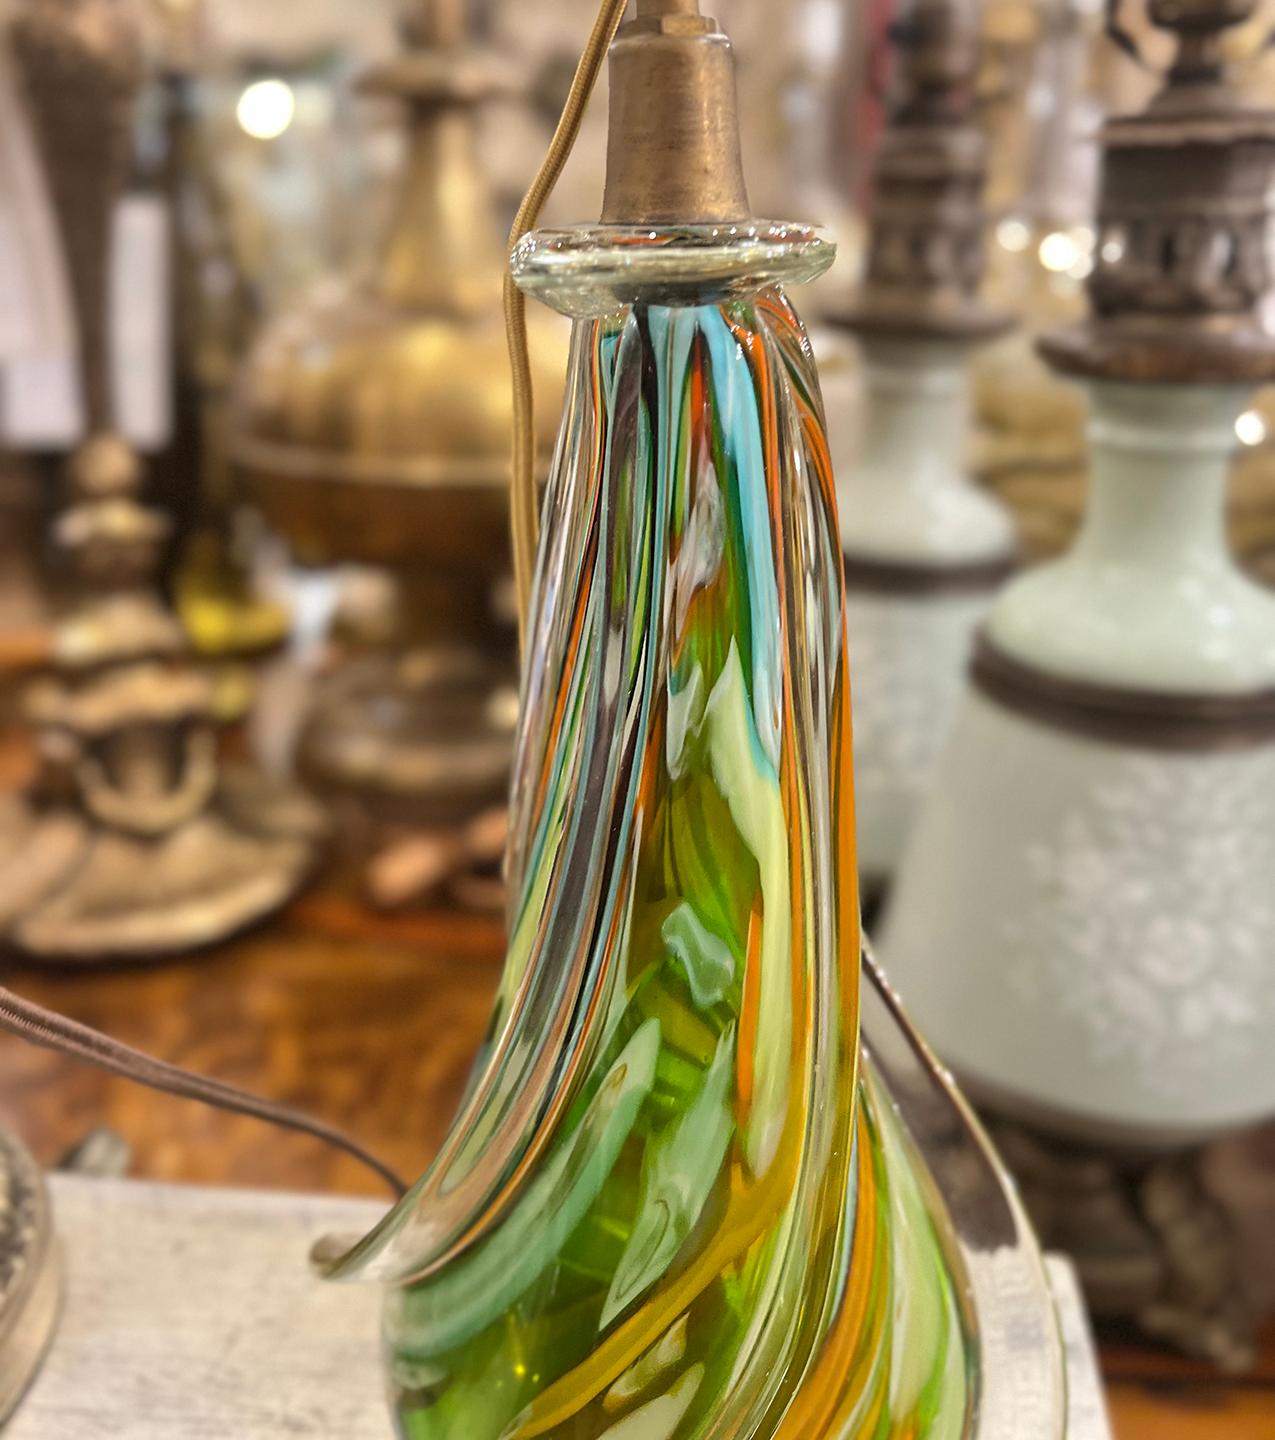 An Italian circa 1950's multi-colored hand-blown Murano glass lamp.

Measurements:
Height: 11